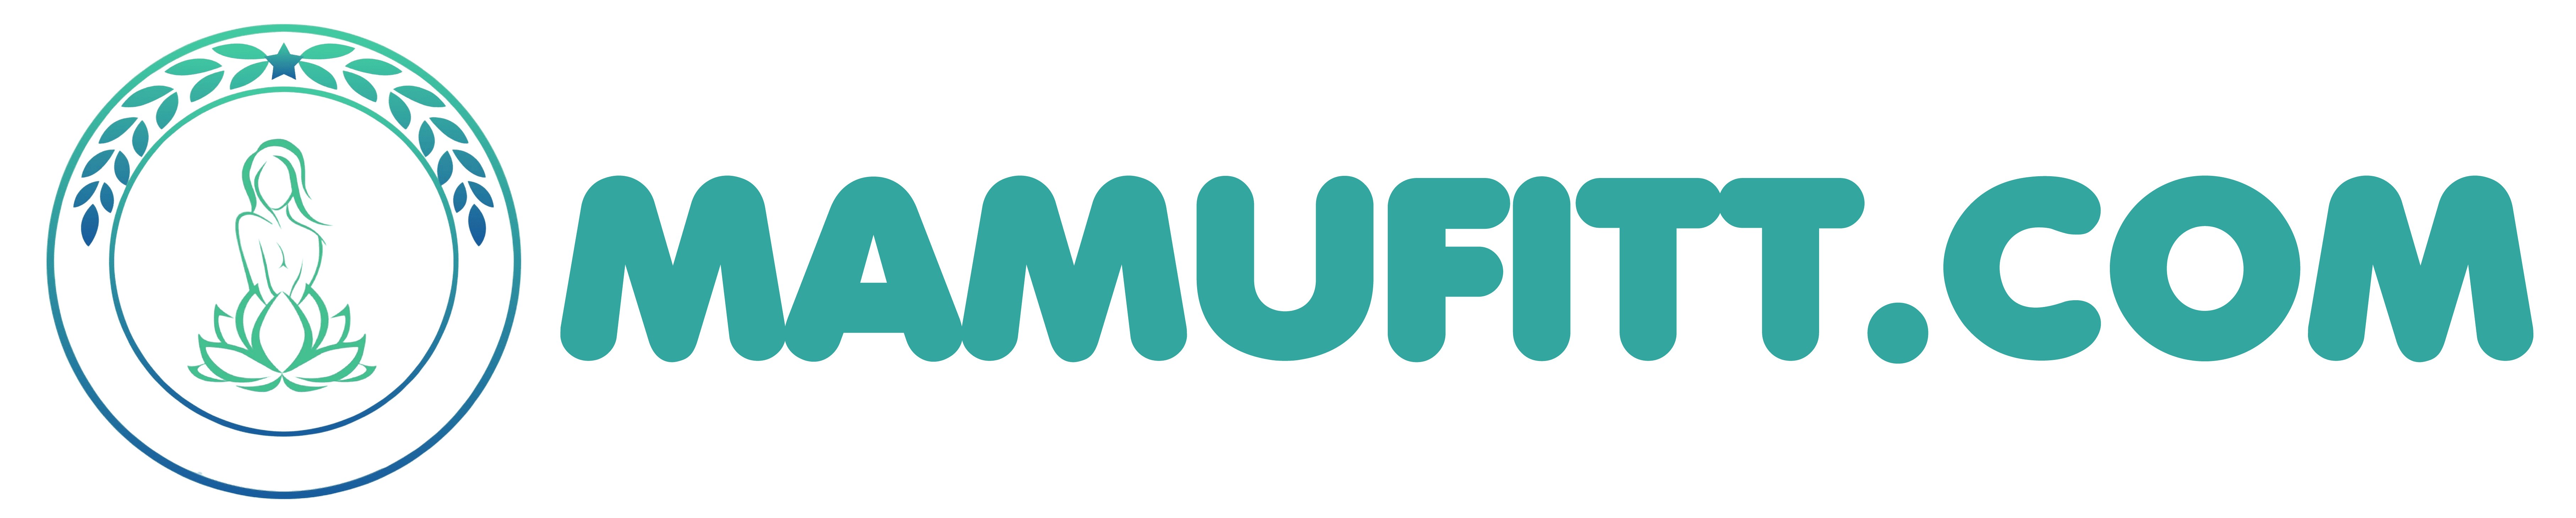 Mamufitt.com – იცხოვრე ჯანსაღად-კვება მამუკასთან ერთად  | Mamufitt.com